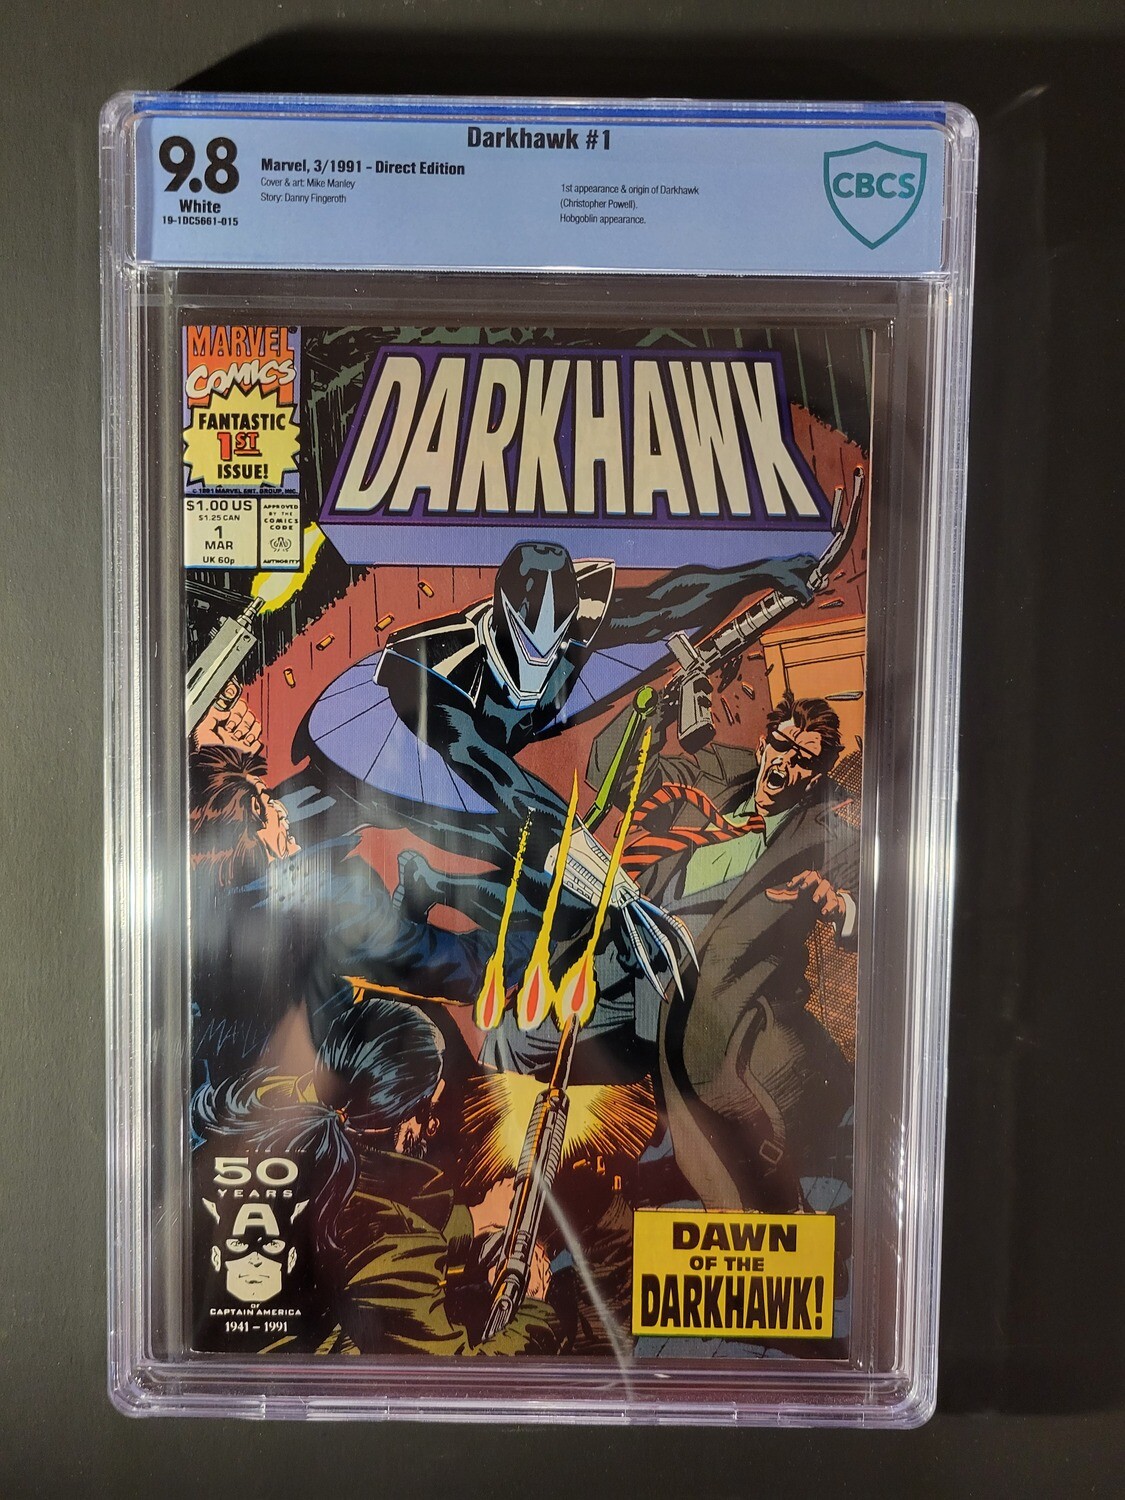 Darkhawk #1 CBCS 9.8 1st appearance and origin of Darkhawk